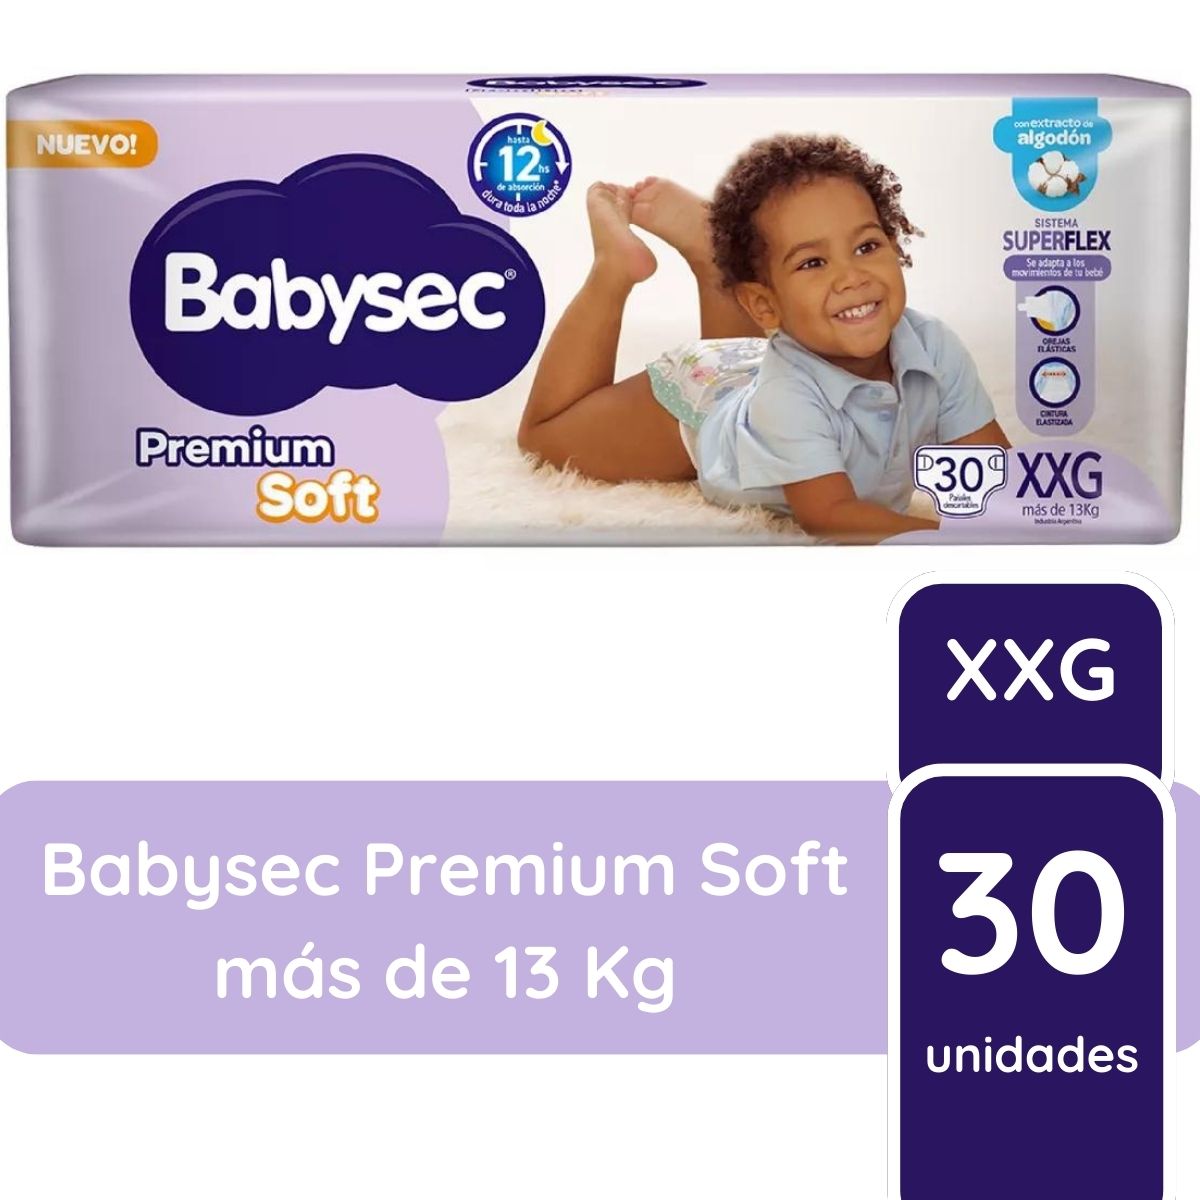 Imagen 1 de 2 de Pañales Babysec Premium Soft XXG x 30 unidades